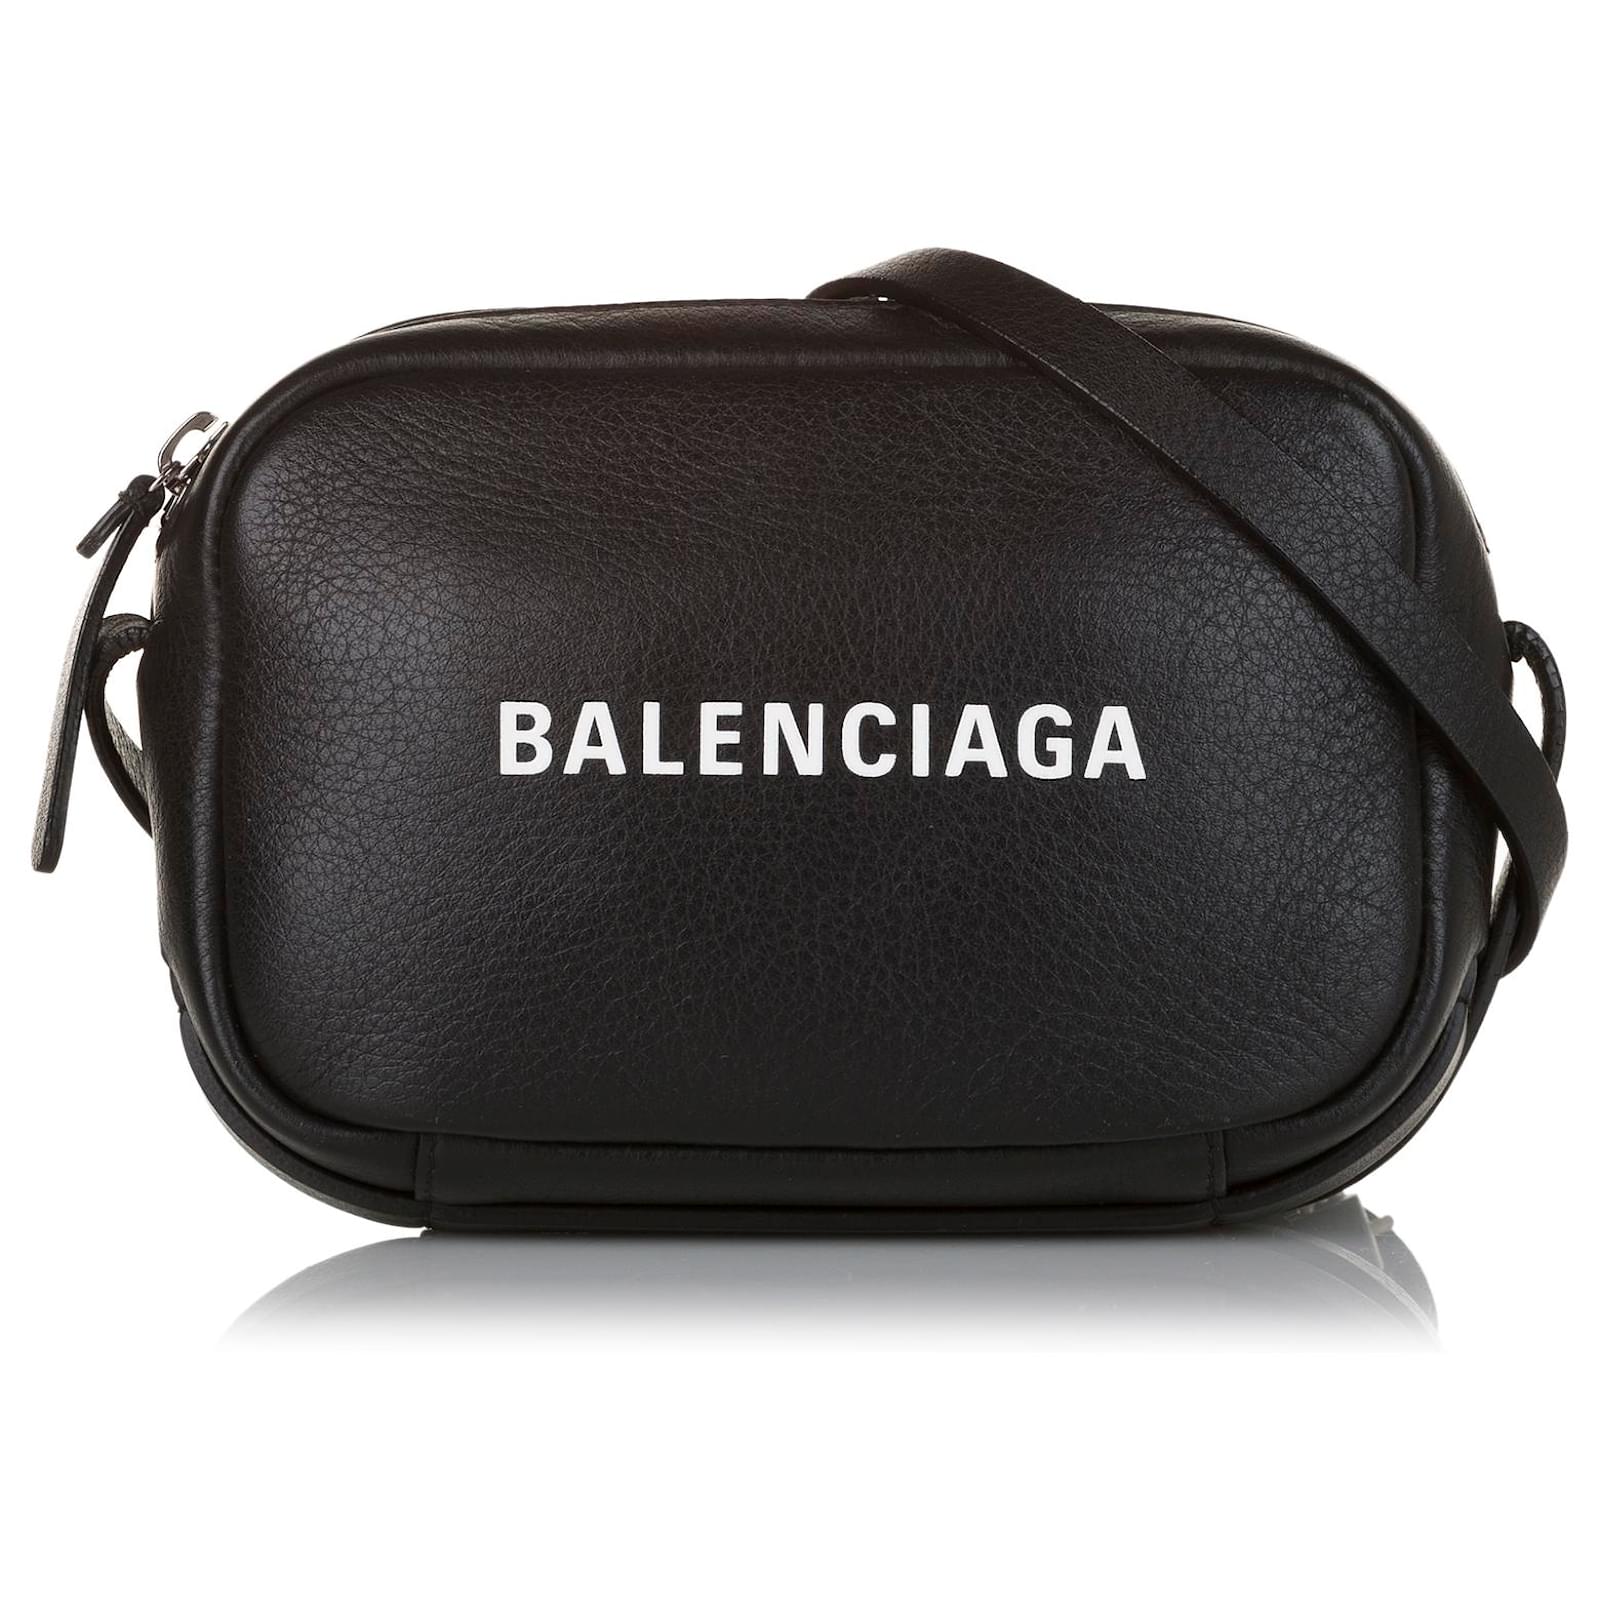 Balenciaga Small Everyday Calfskin Leather Camera Bag - White In